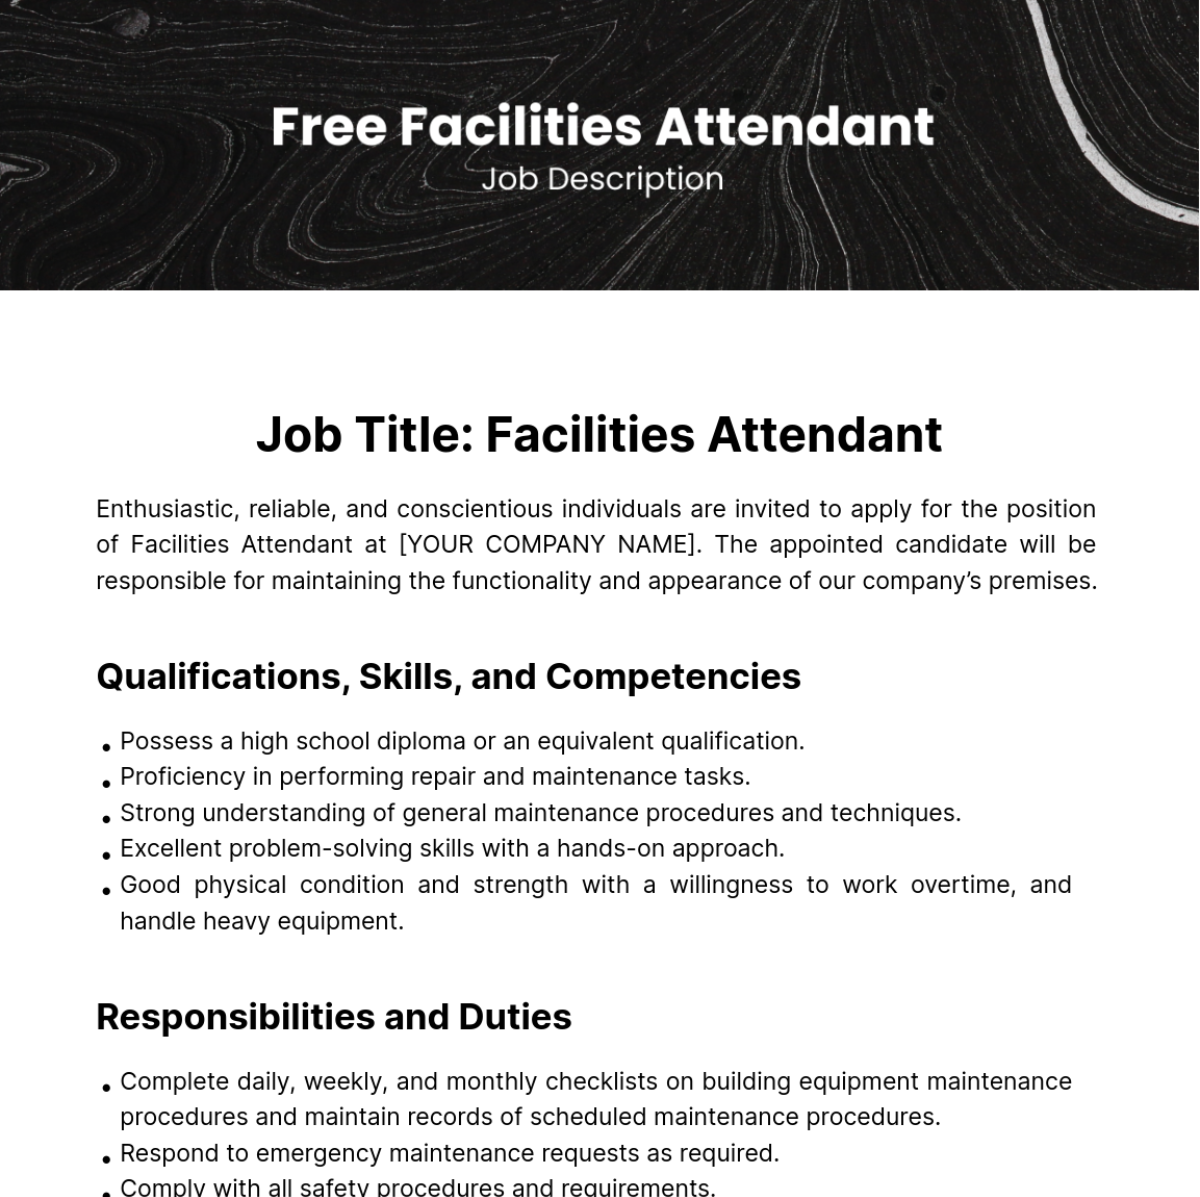 Free Facilities Attendant Job Description Template